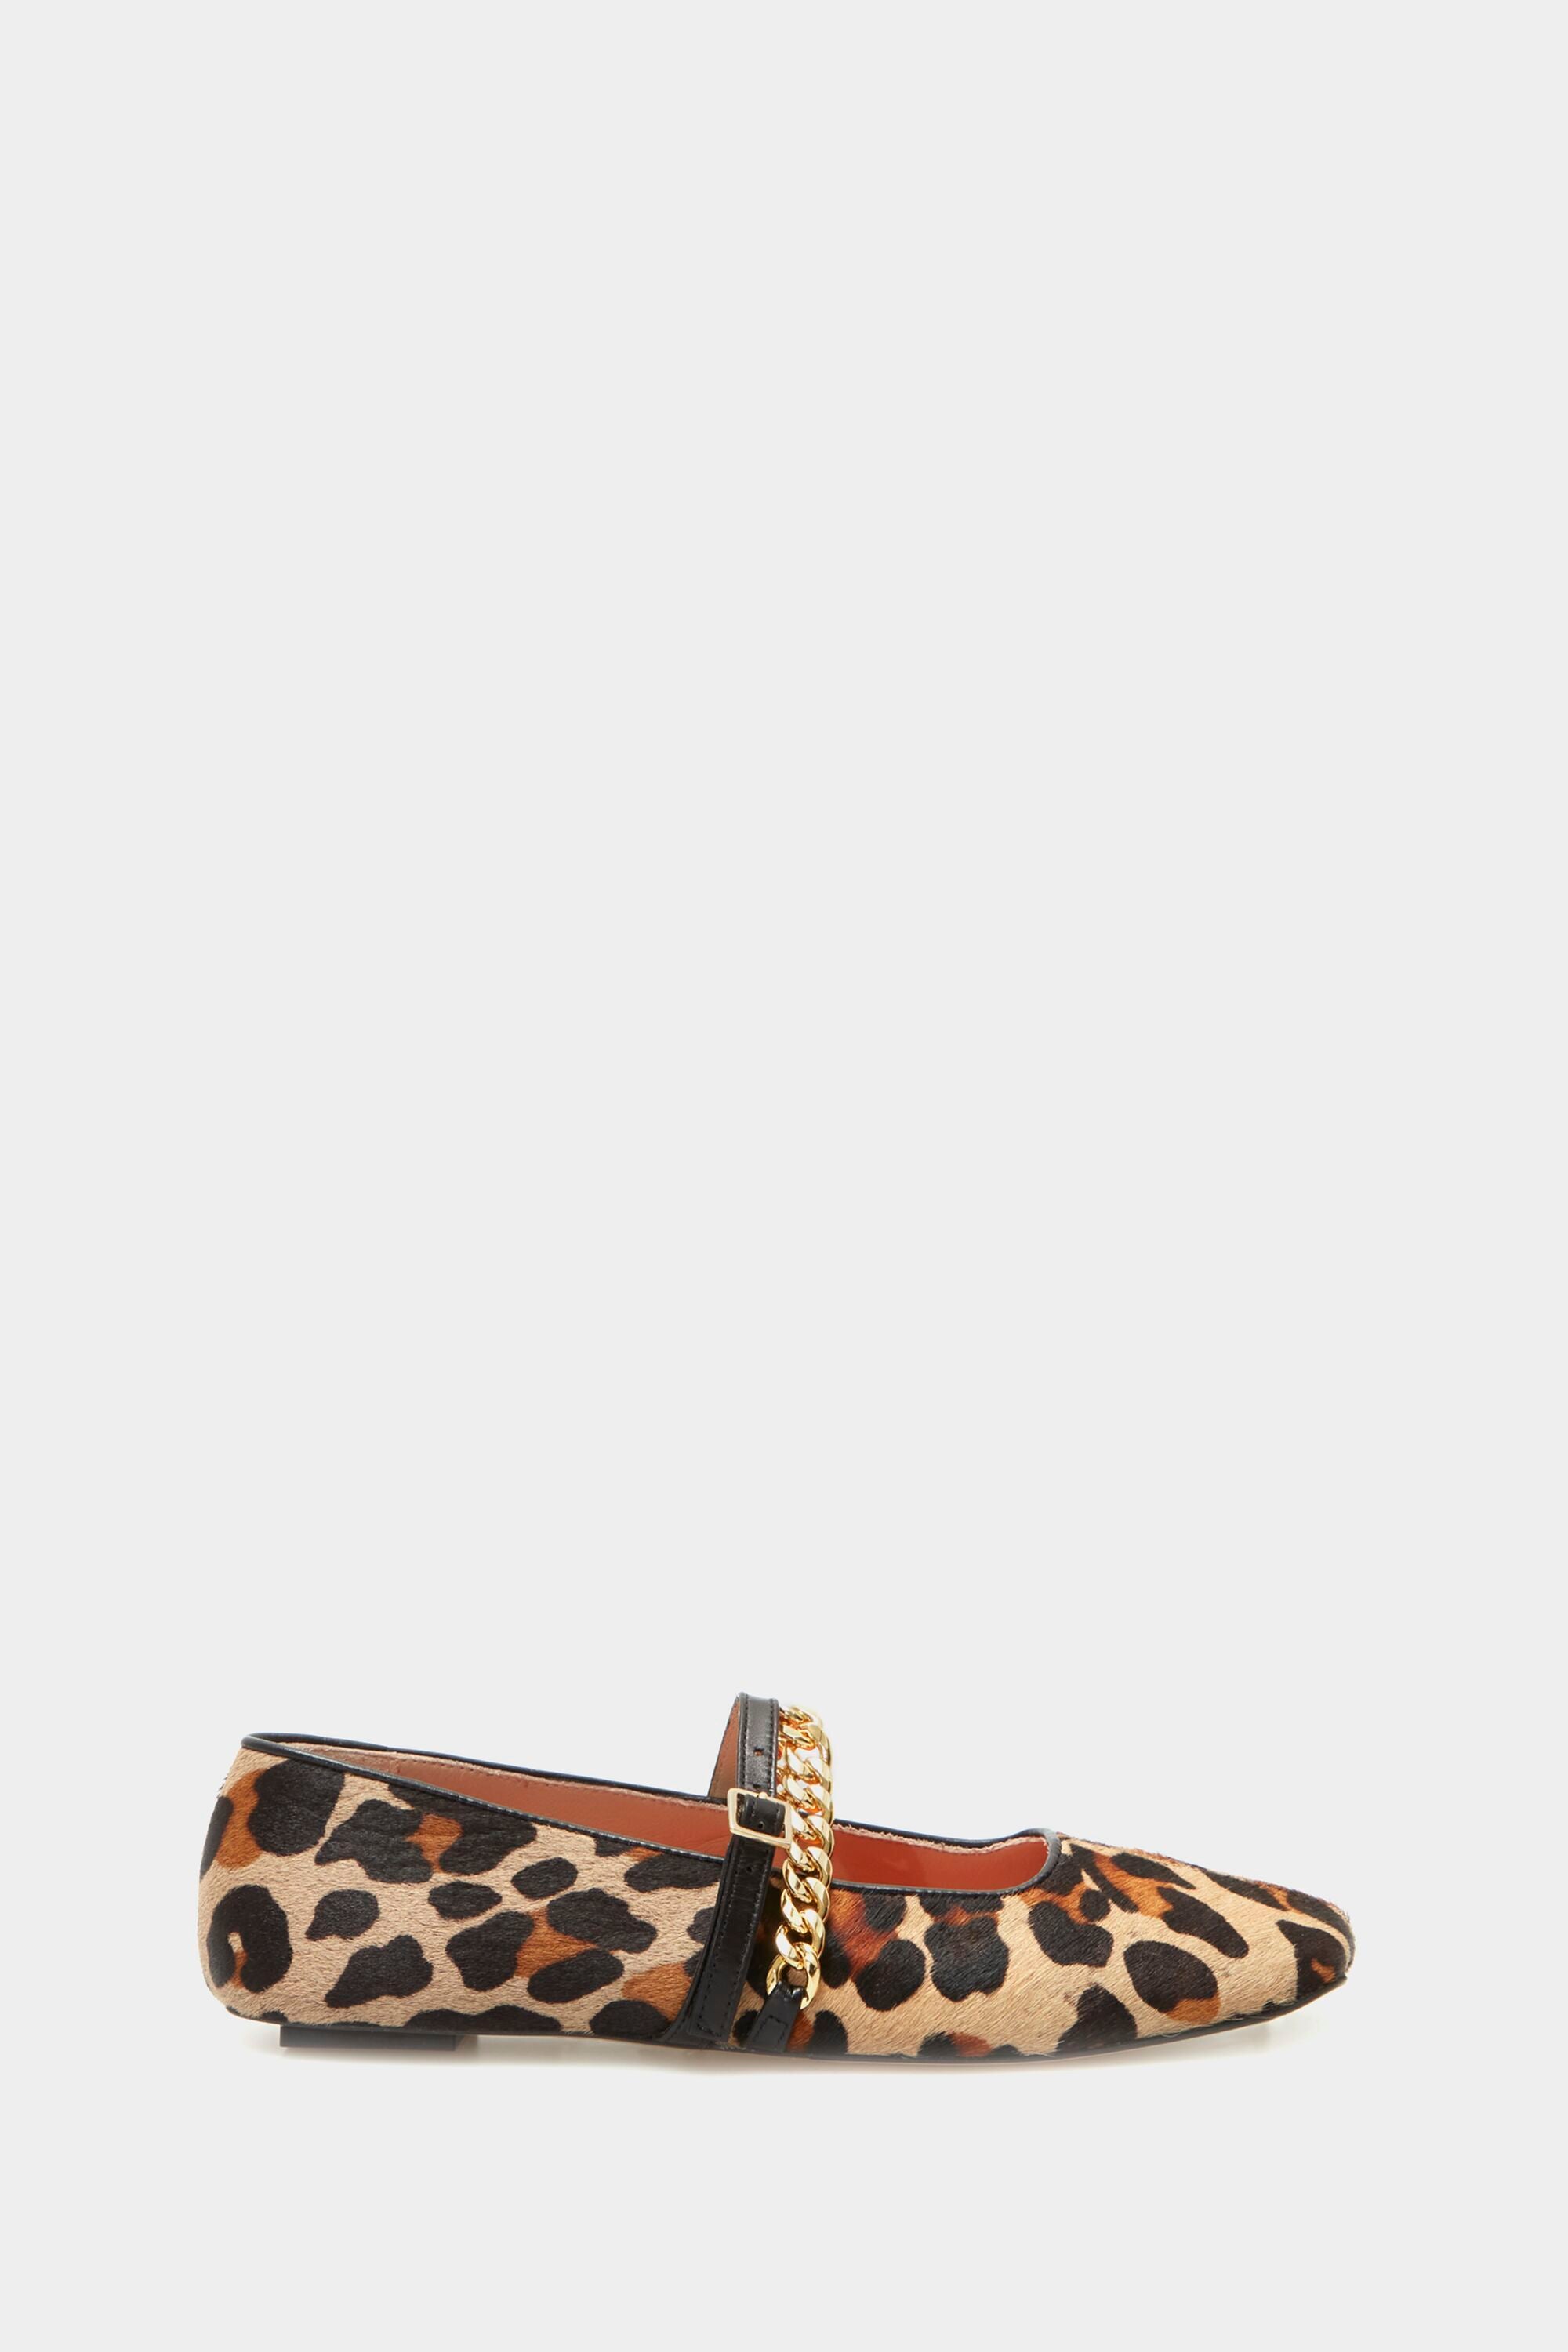 Zapato plano piel estampado leopardo - Purificacion Chile